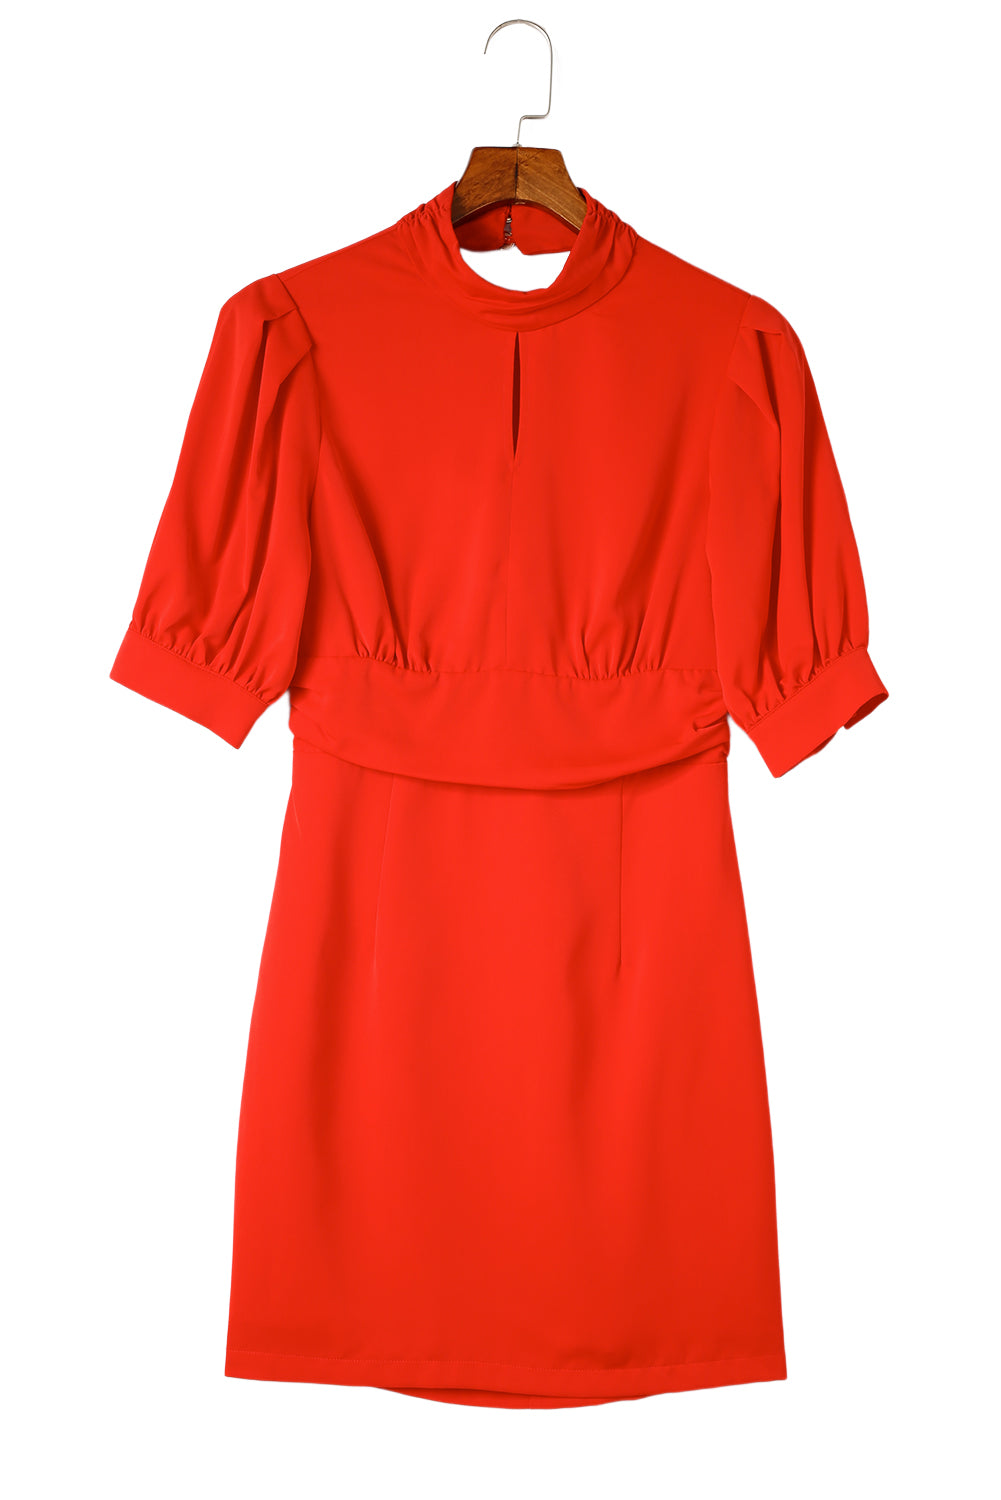 Red High Neck Lantern Sleeves Backless Mini Dress